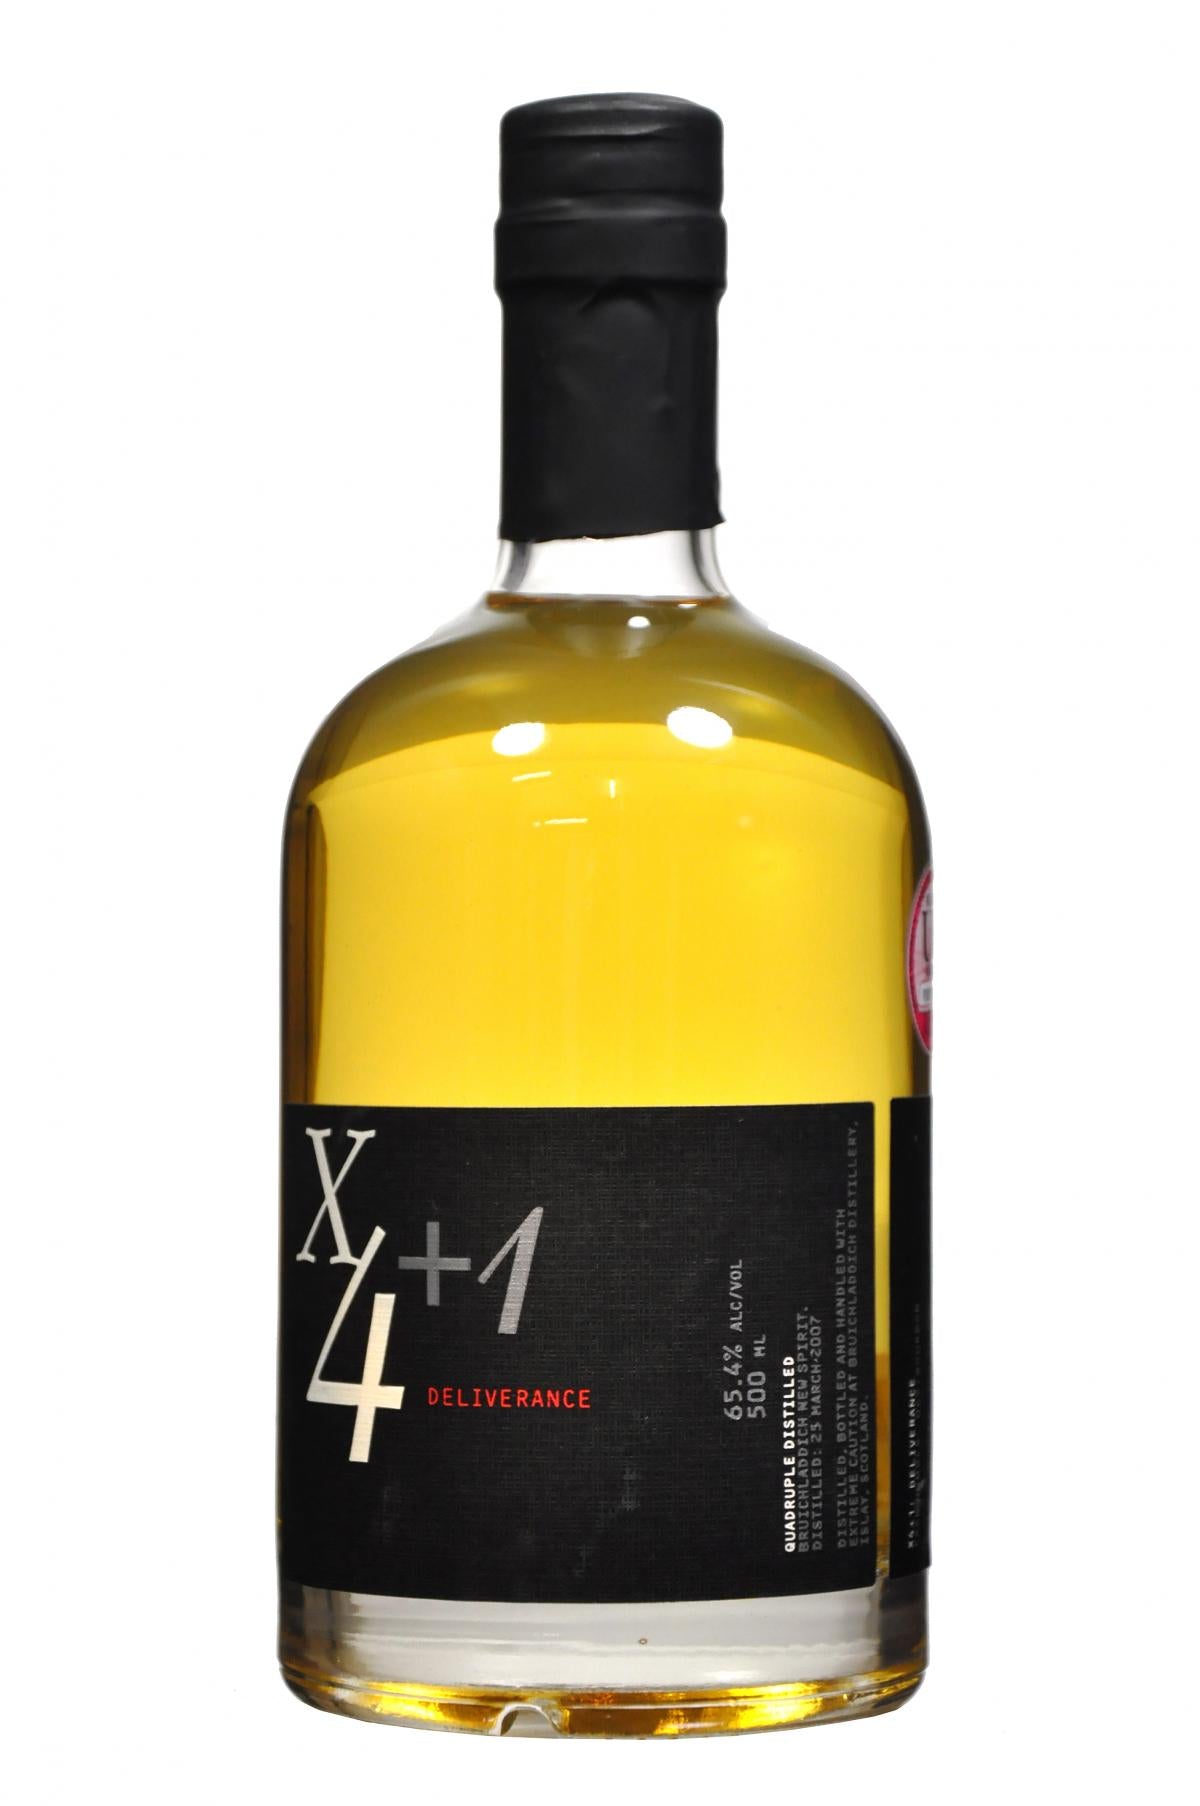 bruichladdich bottled 2008 x4 +1 deliverance islay single malt scotch whisky whiskey